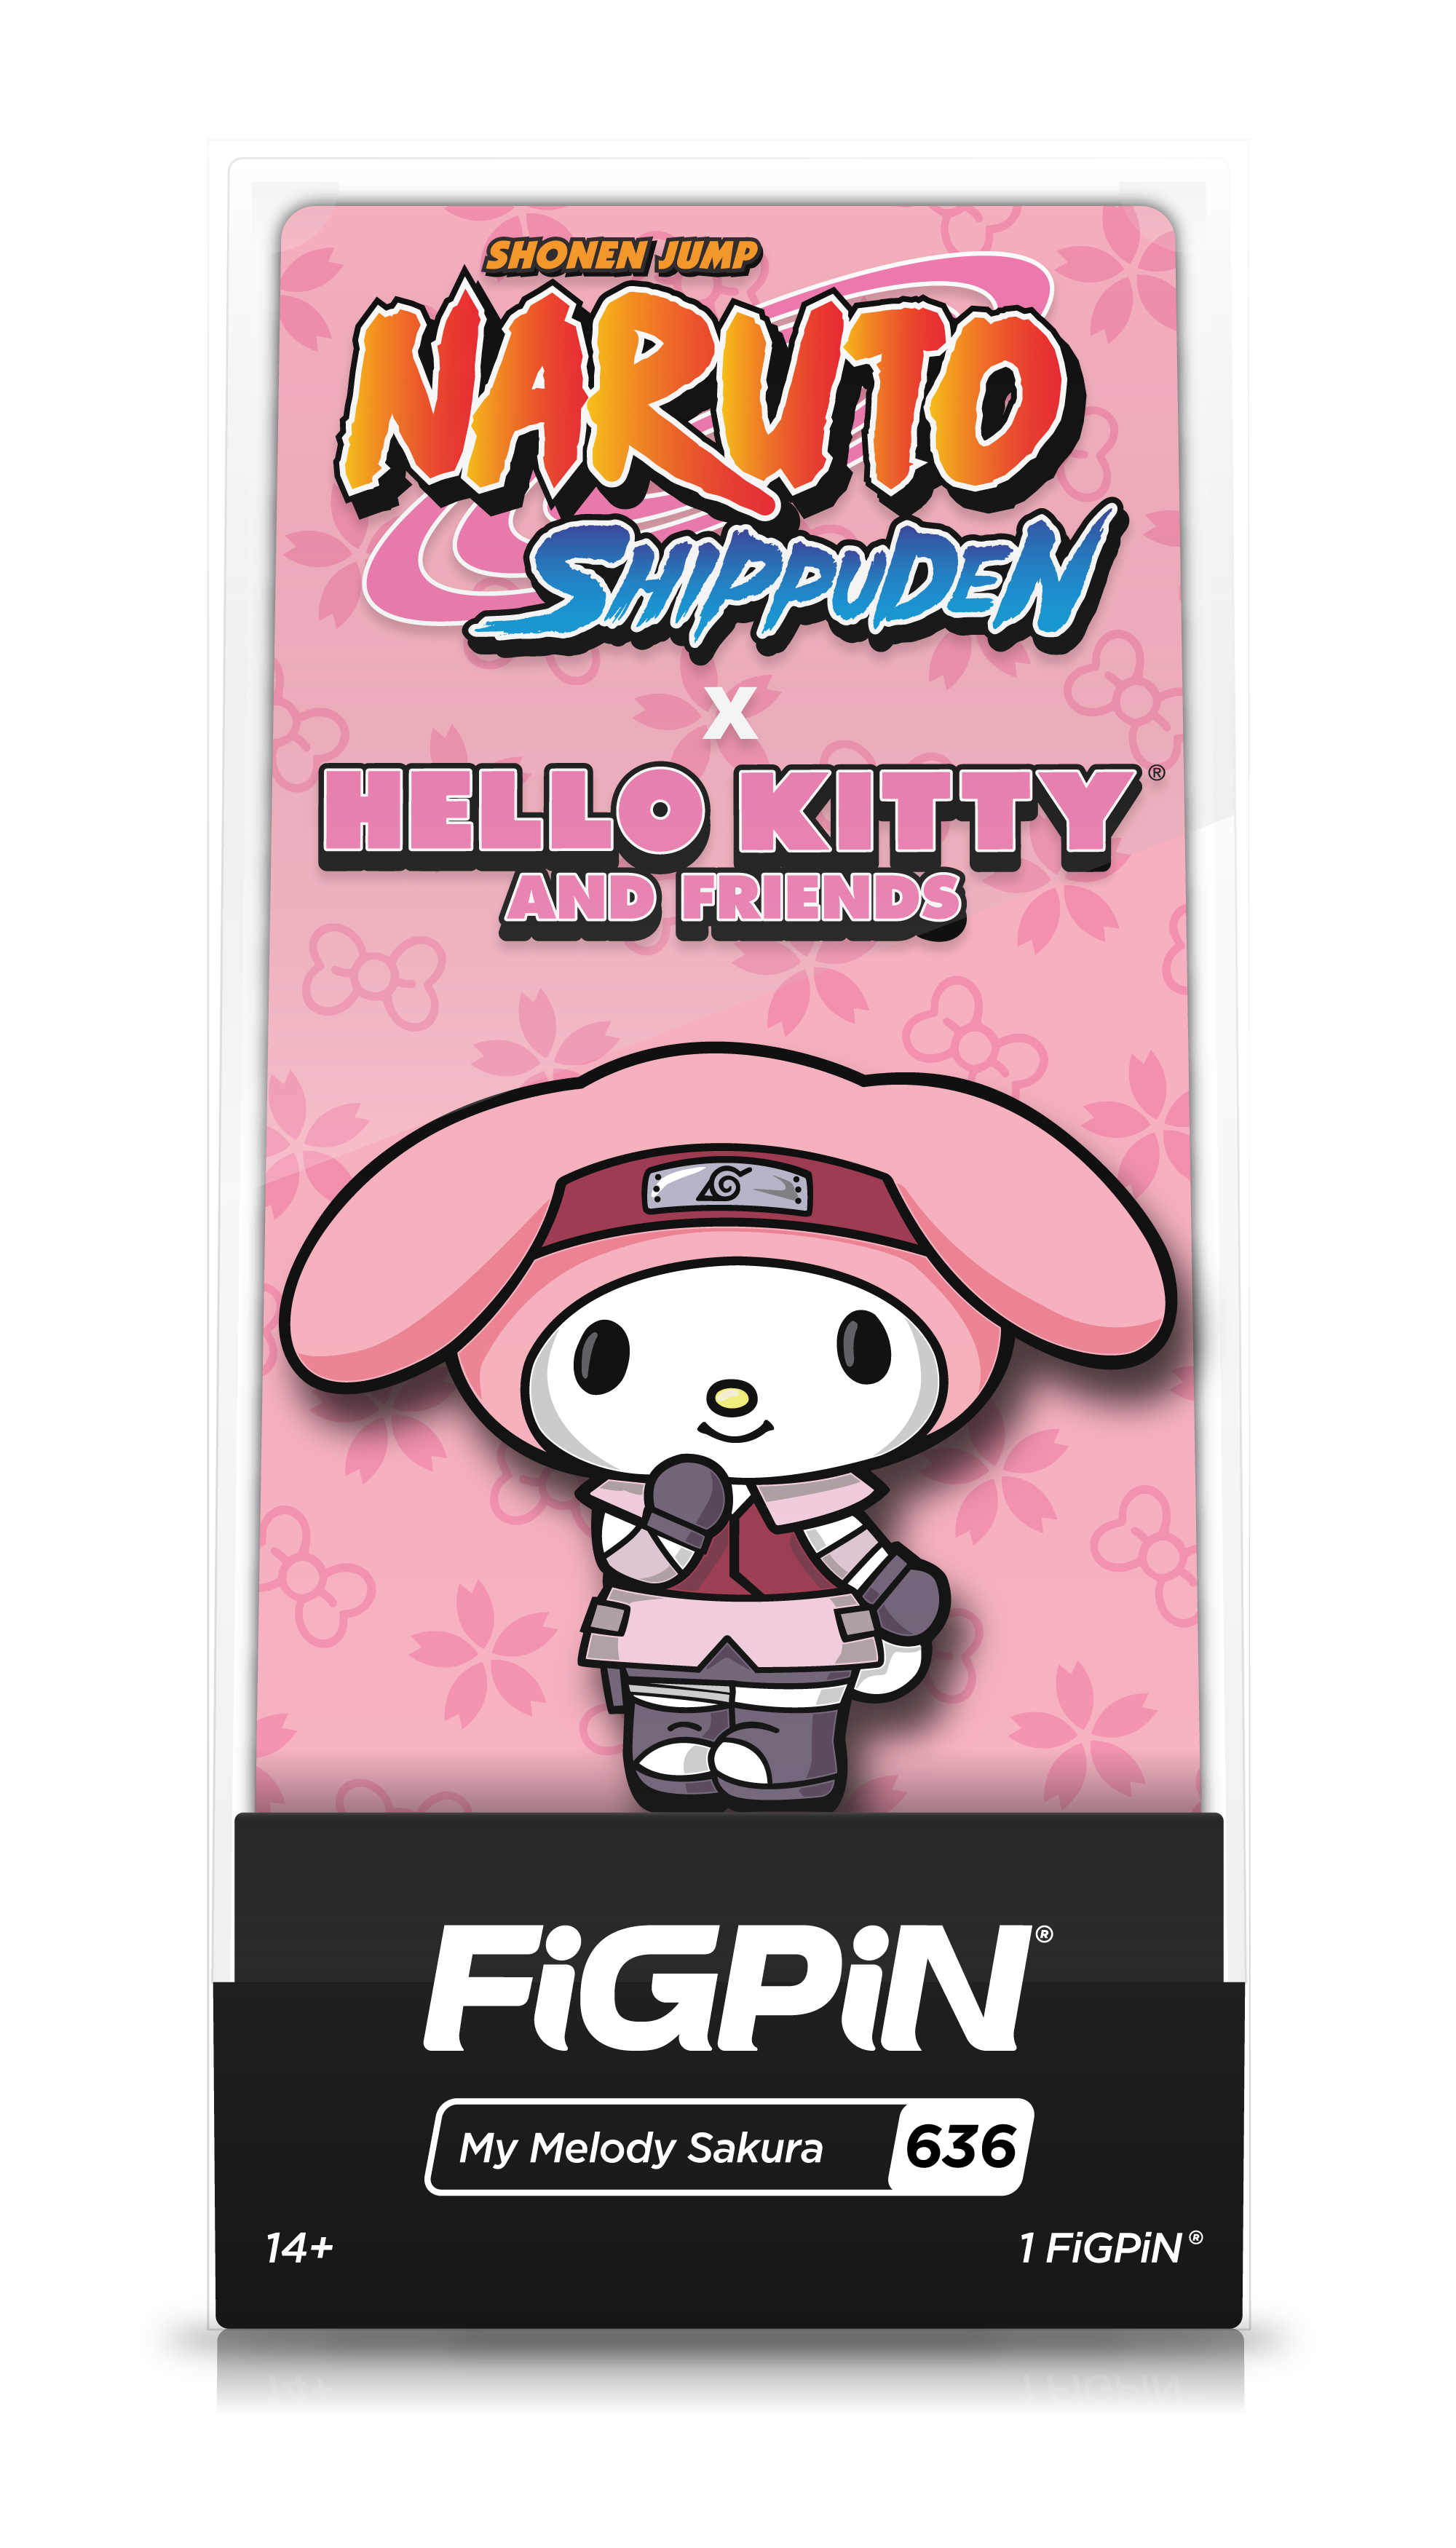 Naruto Shippuden x Hello Kitty: My Melody Sakura FiGPiN #636